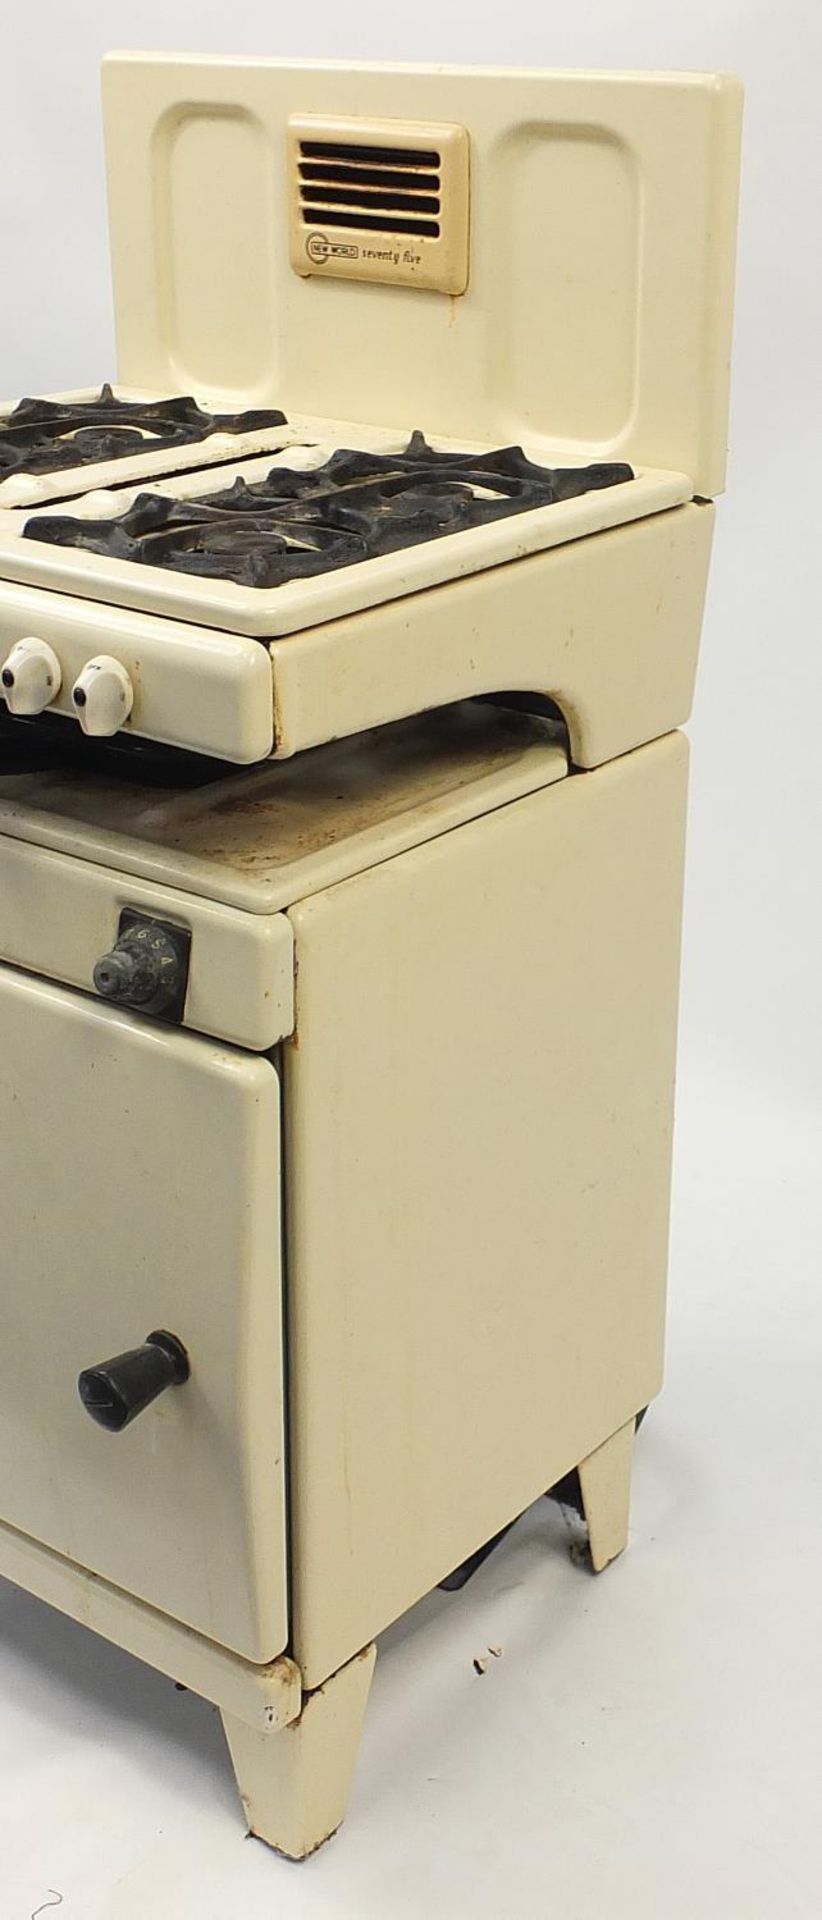 1950's style New World 75 enamel gas cooker, 118cm H x 56cm W x 50cm D : - Image 5 of 6